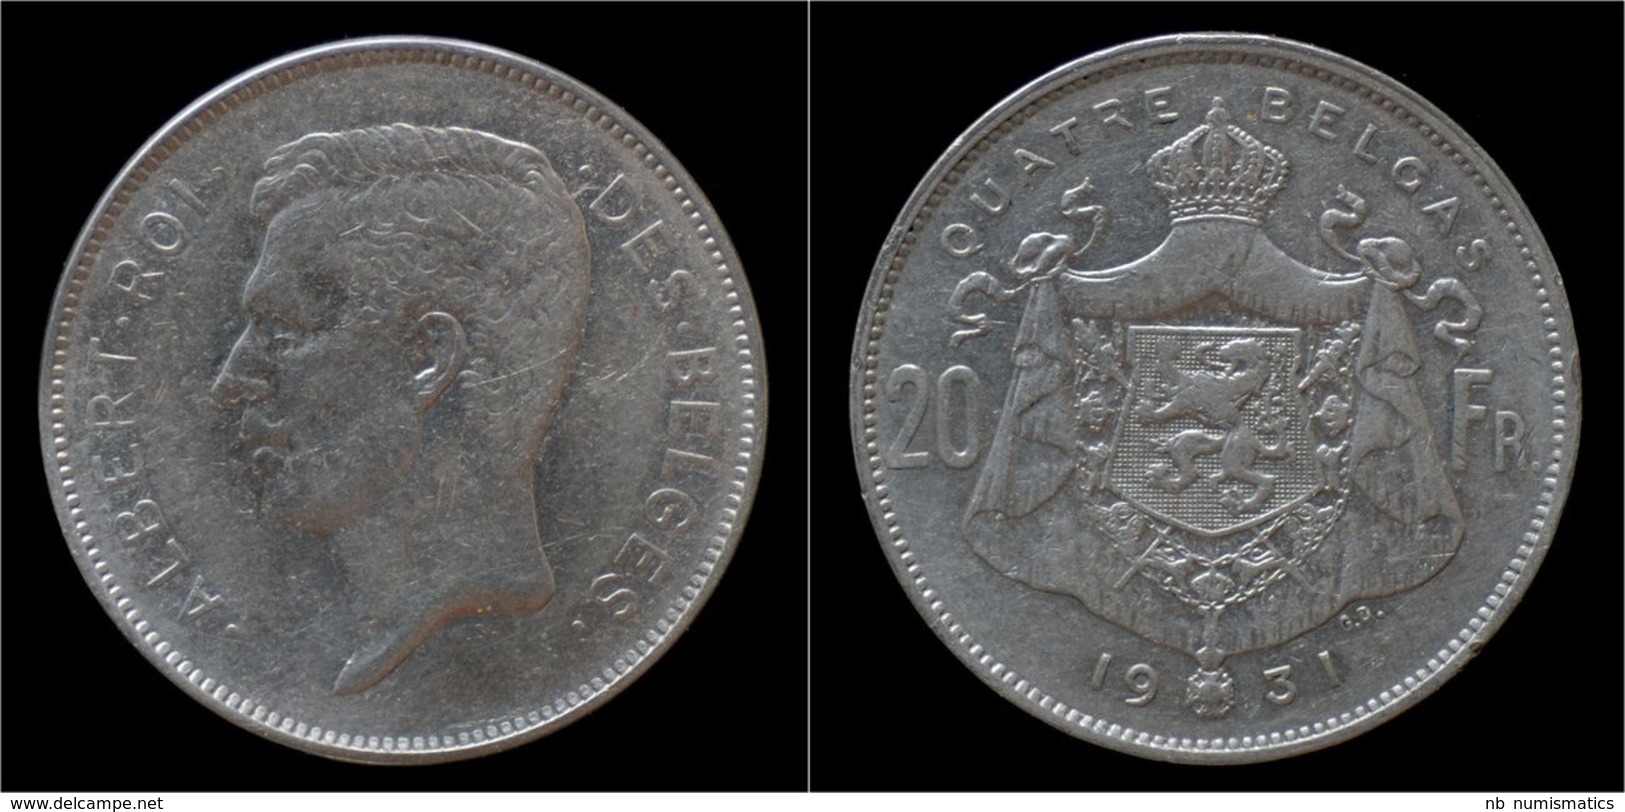 Belgium Albert I 20 Frank (4belga) 1931FR-pos B - 20 Francs & 4 Belgas